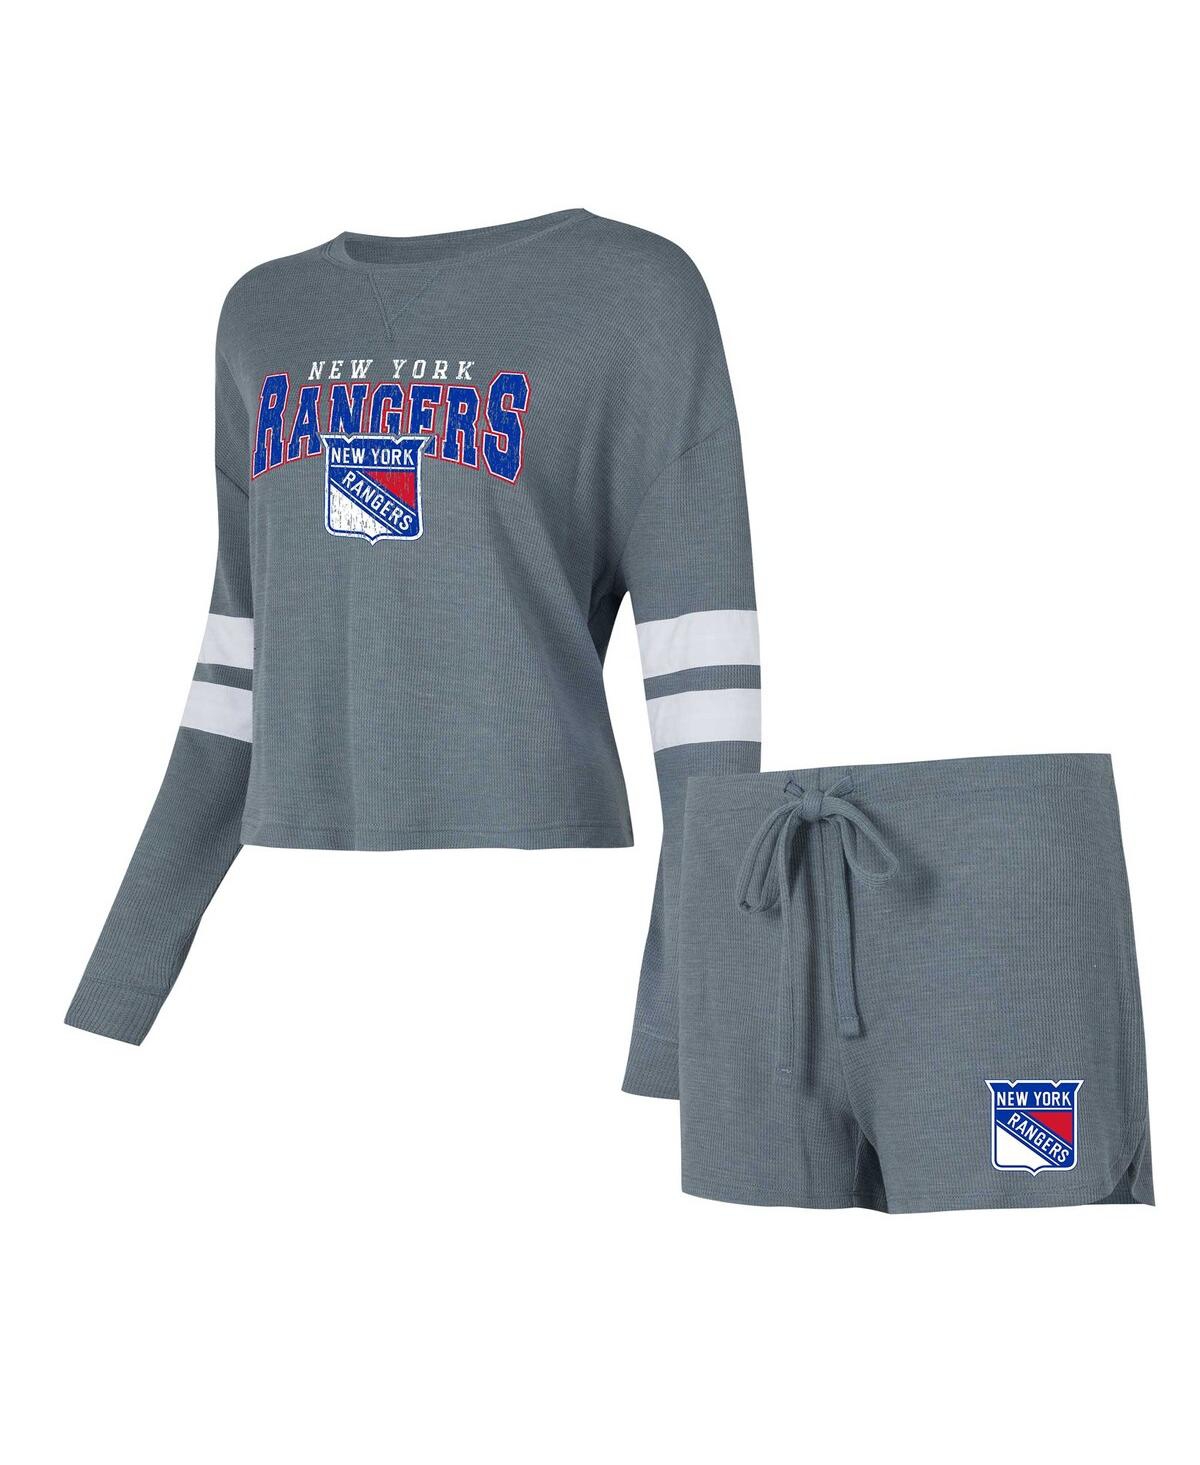 Women's Concepts Sport Gray Distressed New York Rangers MeadowÂ Long Sleeve T-shirt and Shorts Sleep Set - Gray